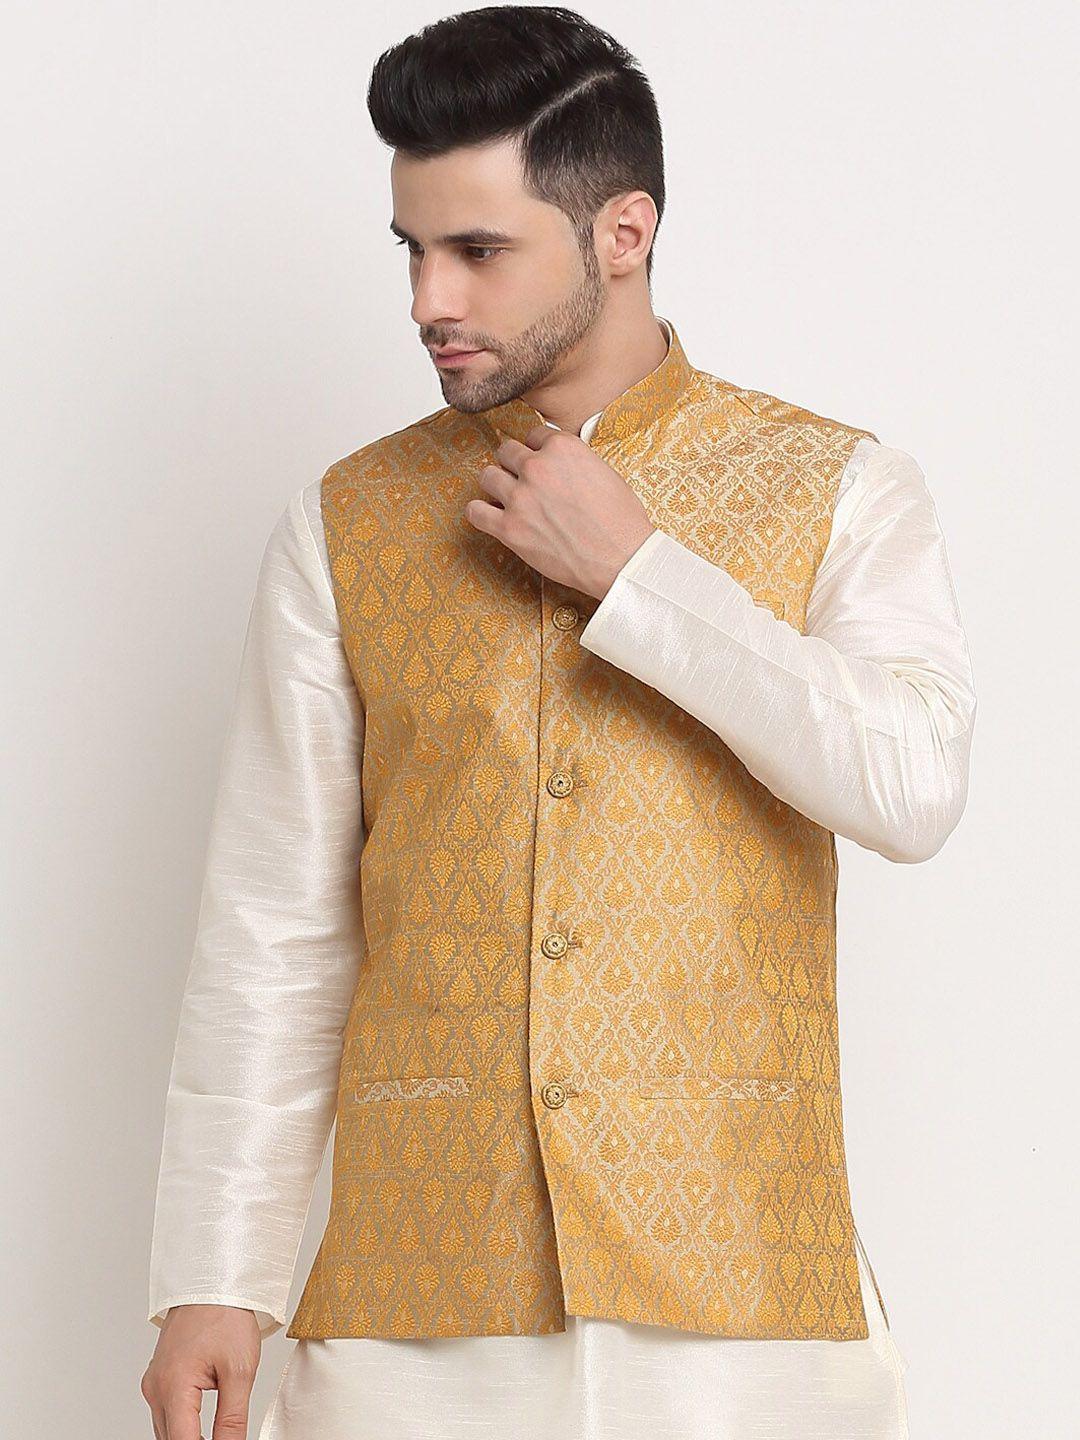 kraft-india-men-gold-coloured-jacquard-woven-design-nehru-jacket